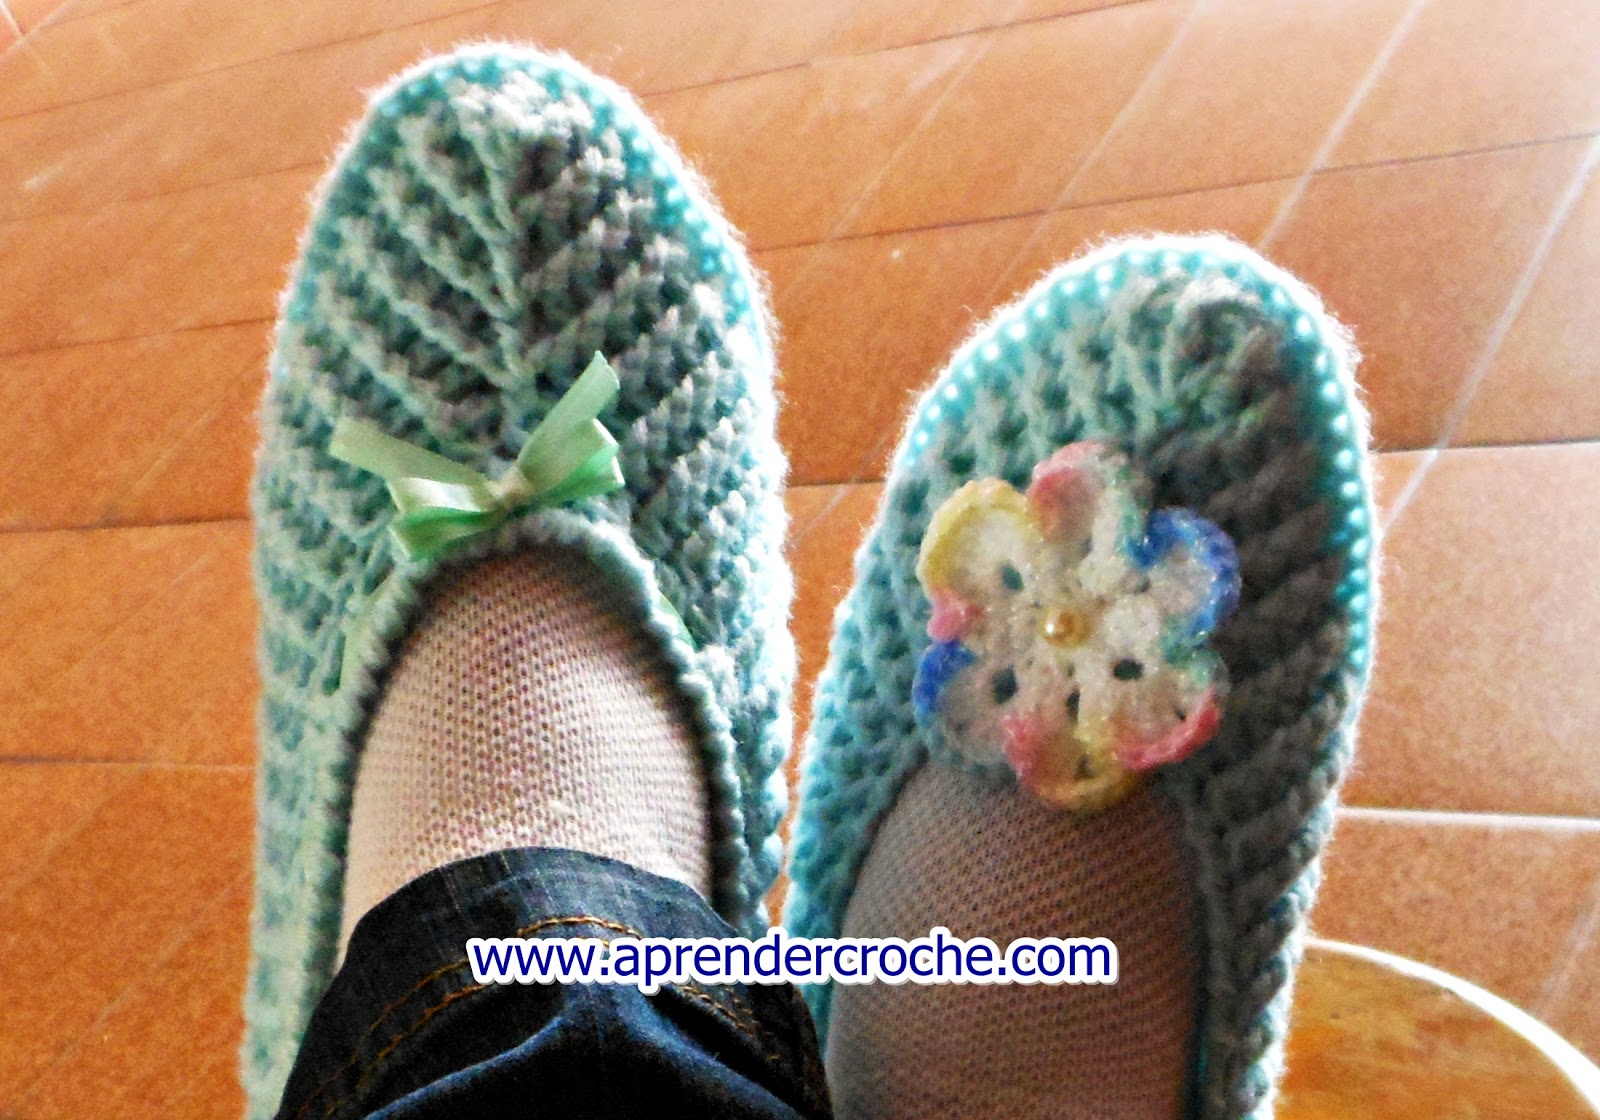 aprender croche pantufas sapatos meias renda-extra dvd loja curso de croche edinir-croche